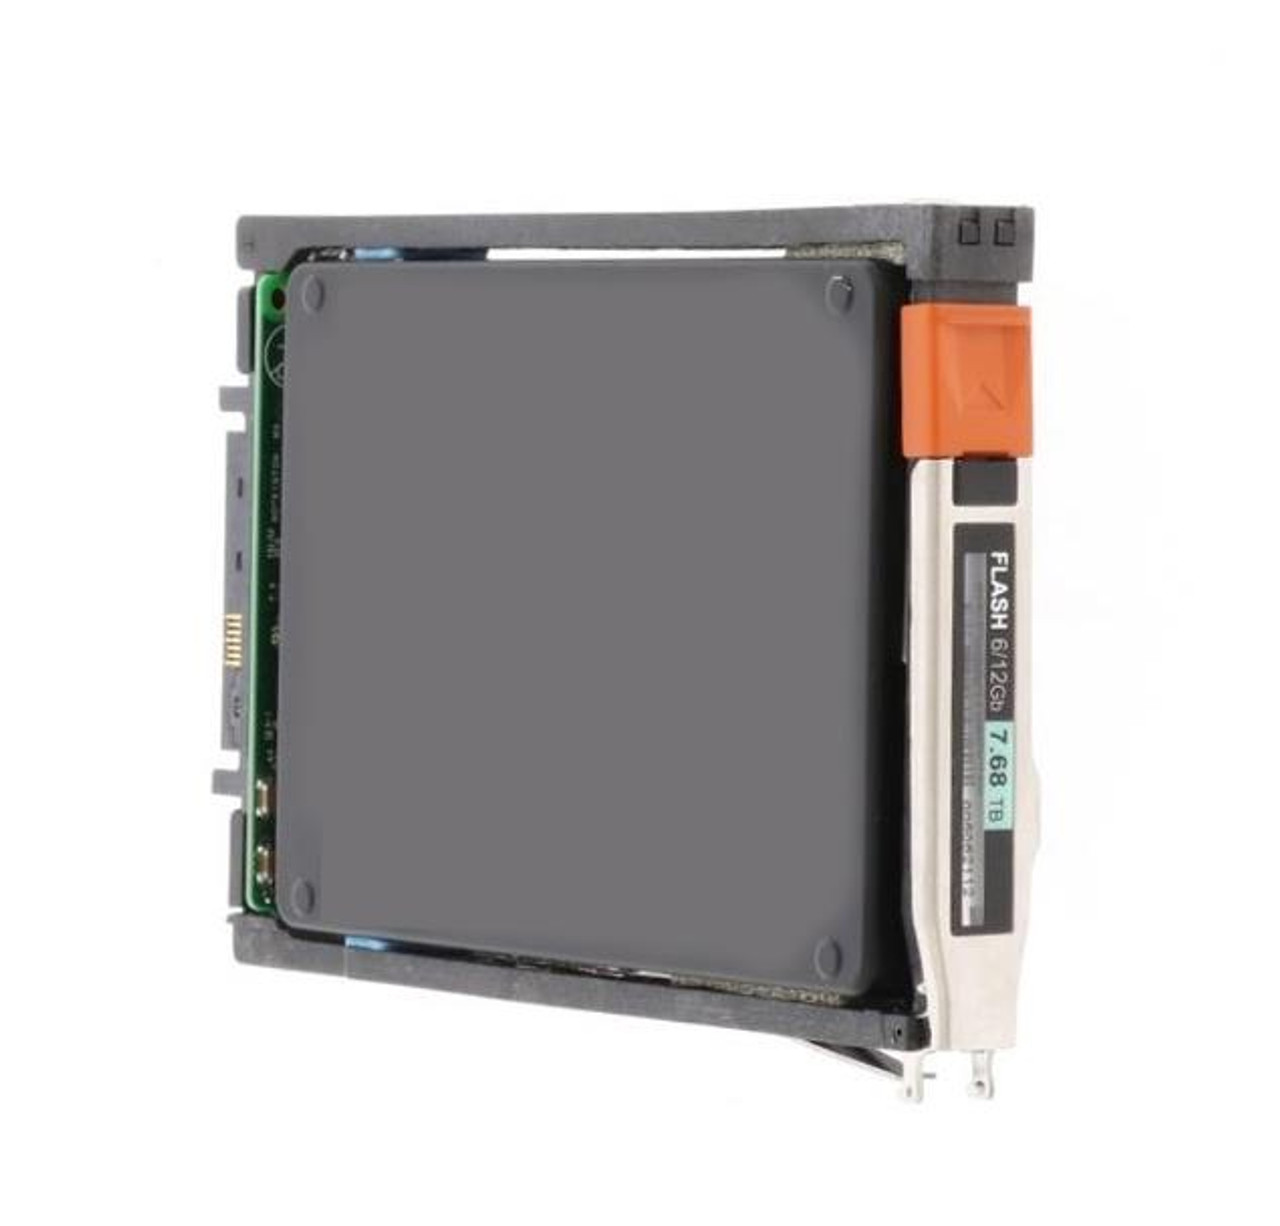 D3F-2SFXL2-7680 EMC Unity 7.68TB 2.5-inch Internal Solid State Drive (SSD) for AFA 25 x 2.5-inch Enclosure